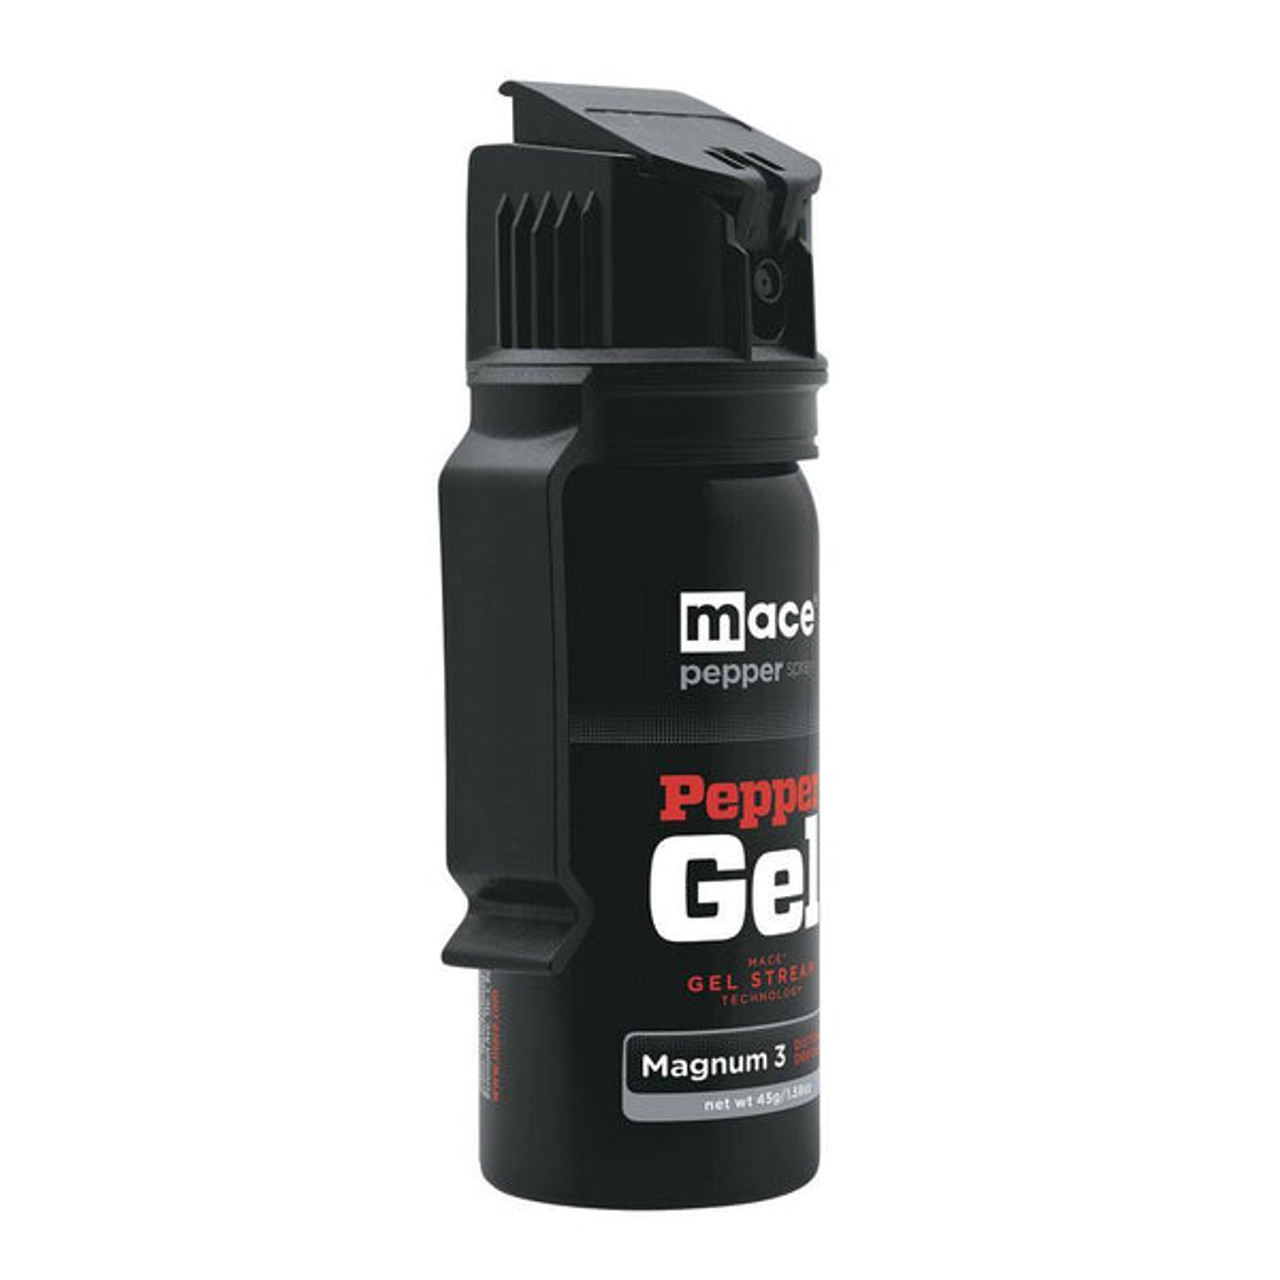 Mace Magnum 3 Model Pepper Gel Spray with UV Dye 20 Bursts 18 Ft Range